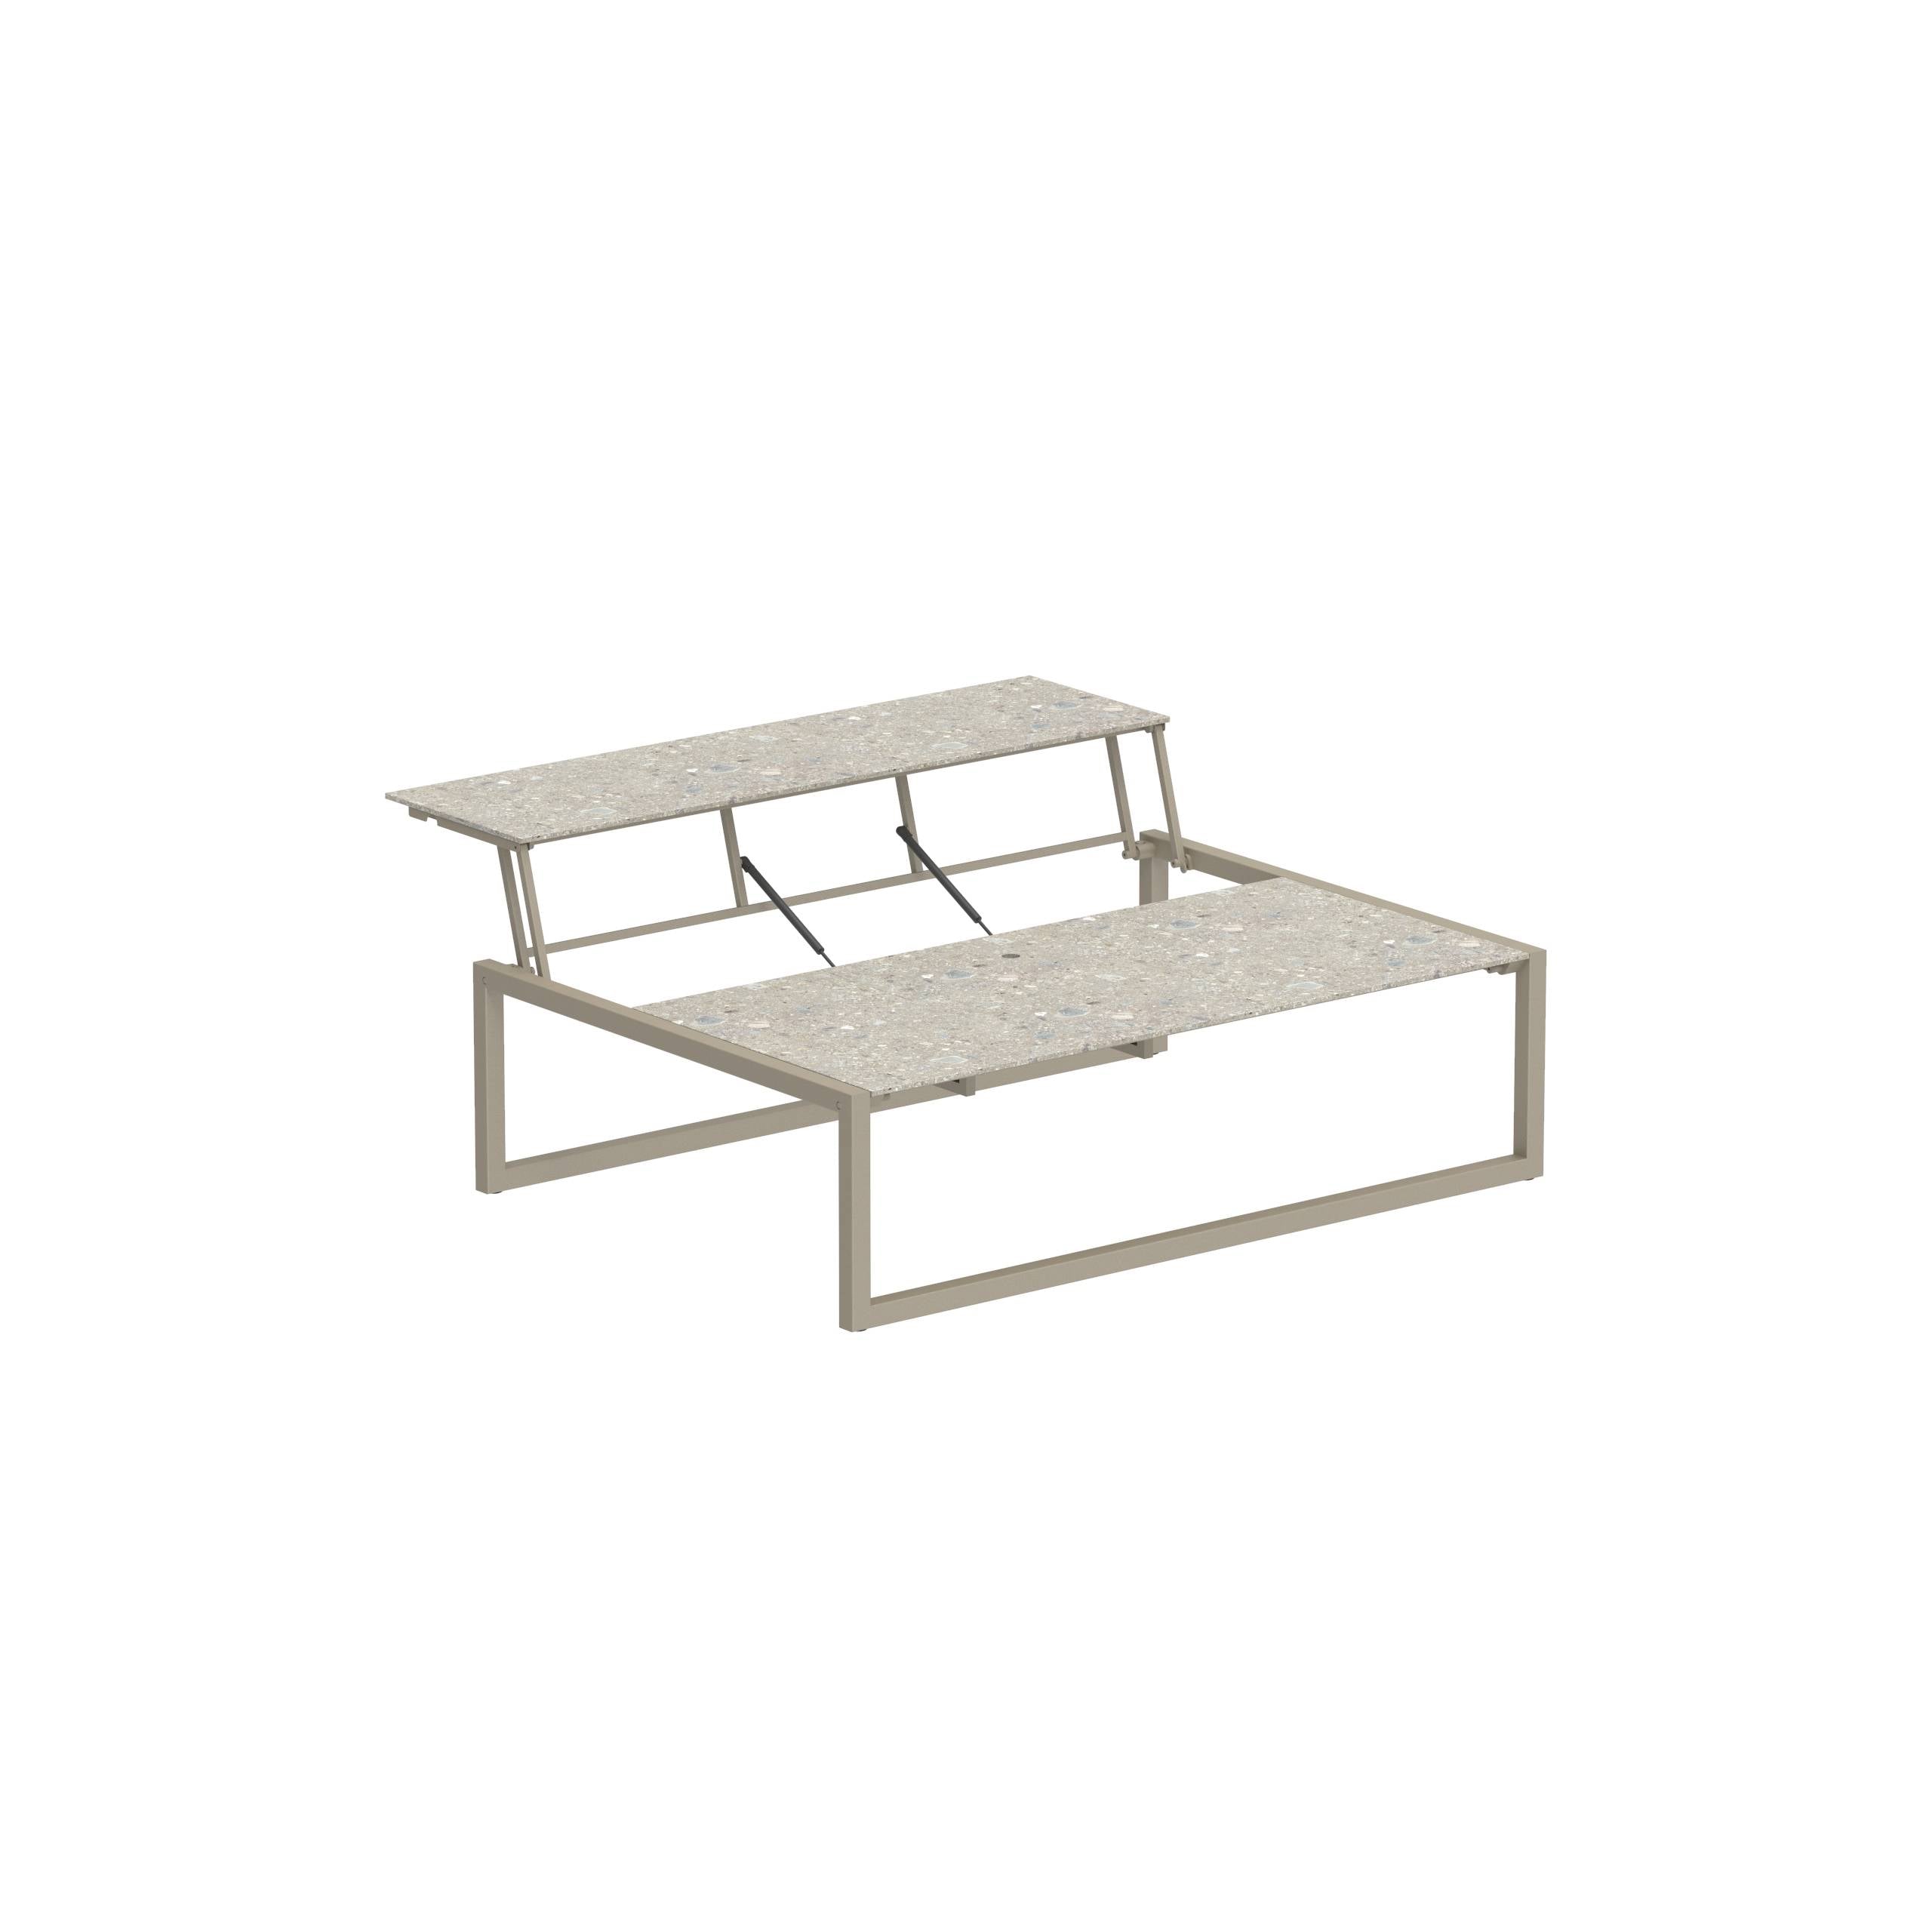 Ninix Lounge Table 150t Coated Sand-Ceramic Ceppo Dolomitica